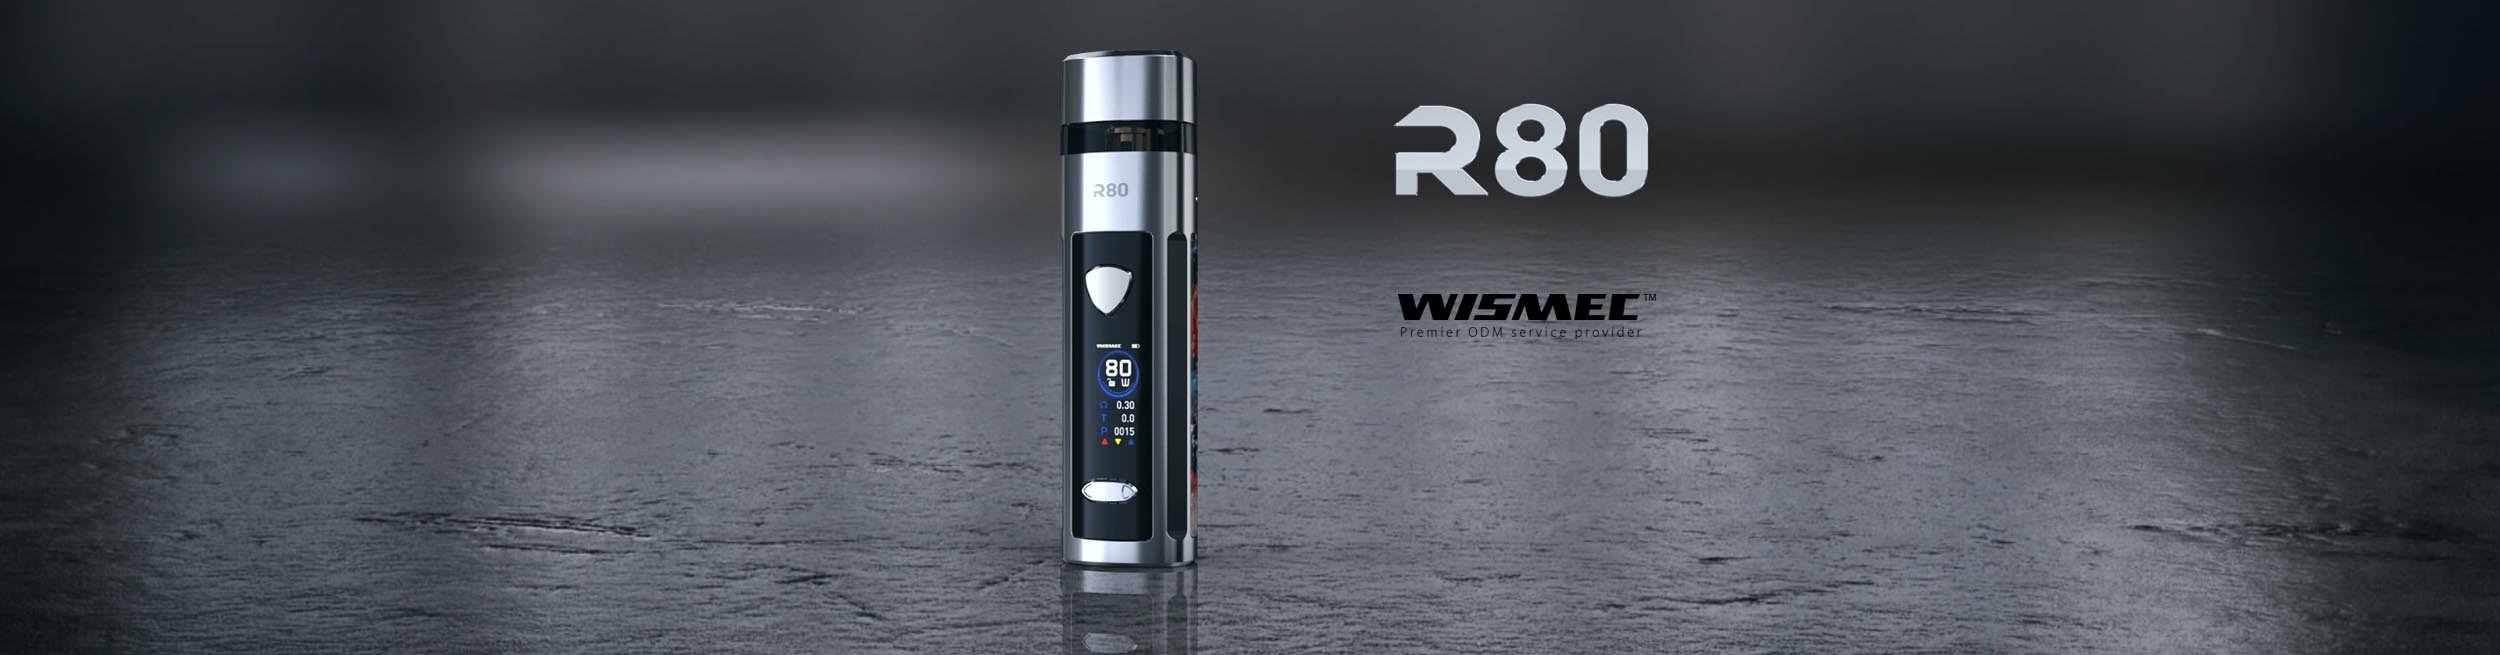 Wismec R80 grip